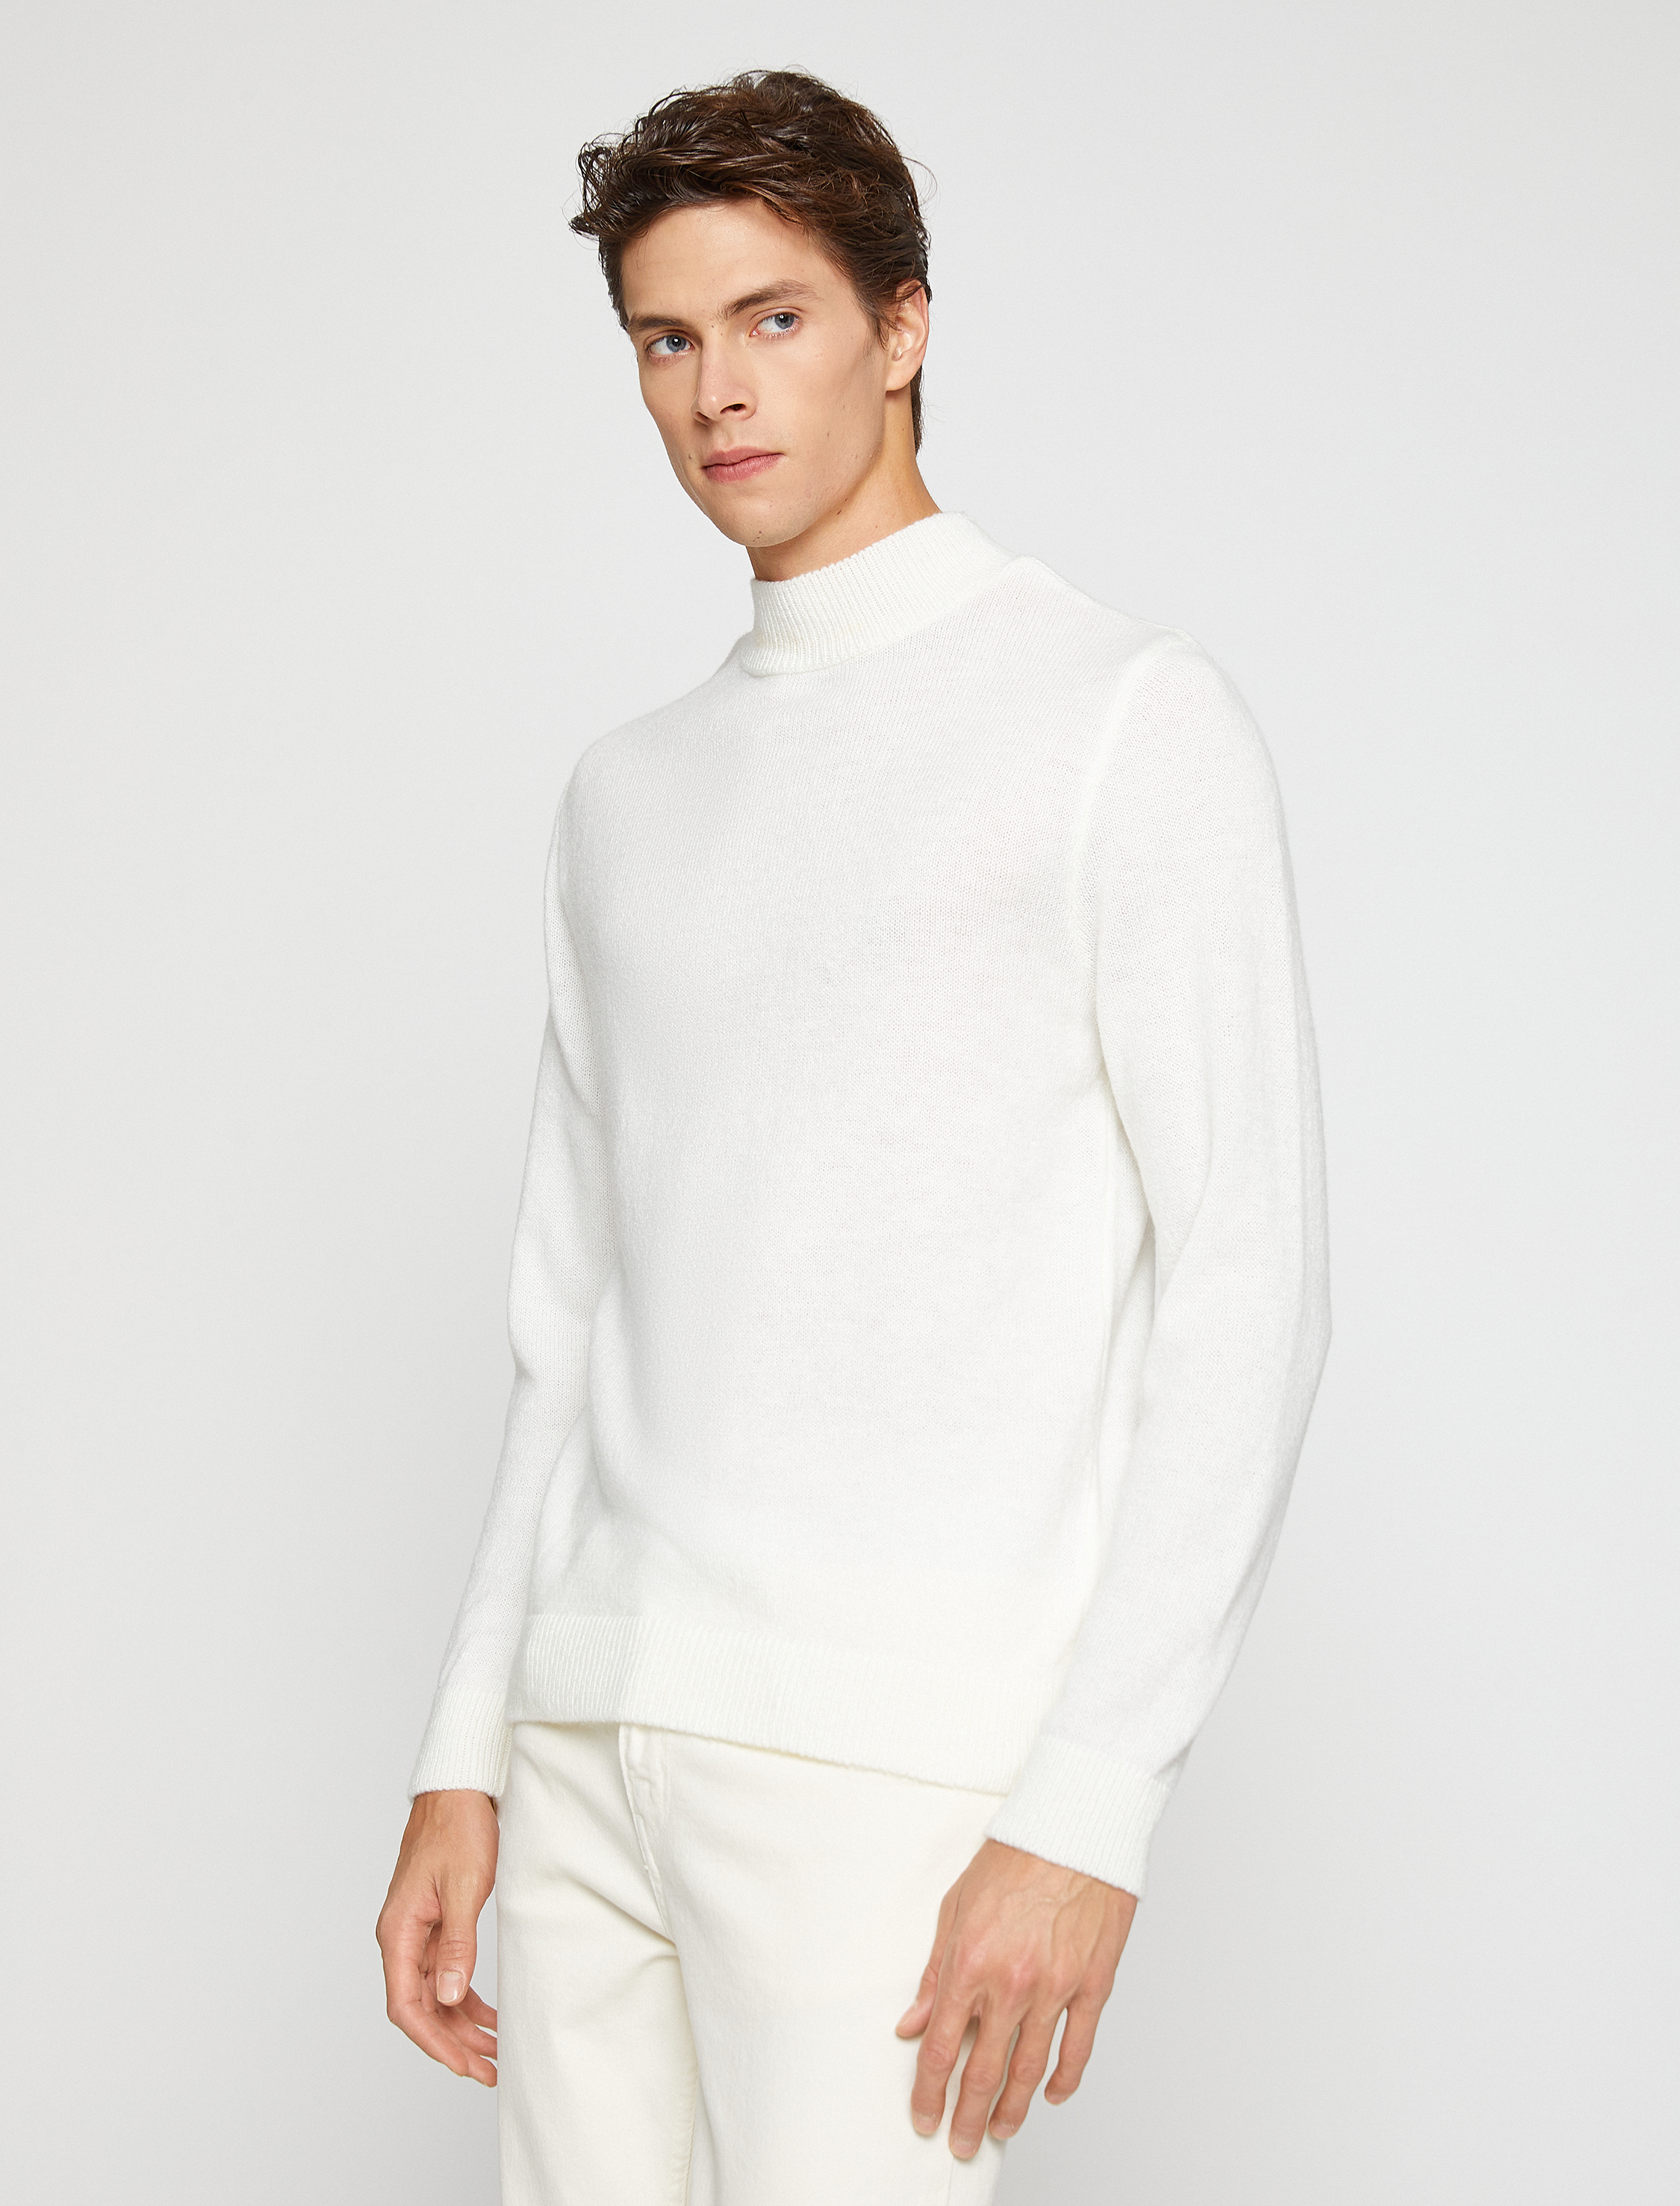 Beige/Red L discount 66% Zara jumper MEN FASHION Jumpers & Sweatshirts Print 